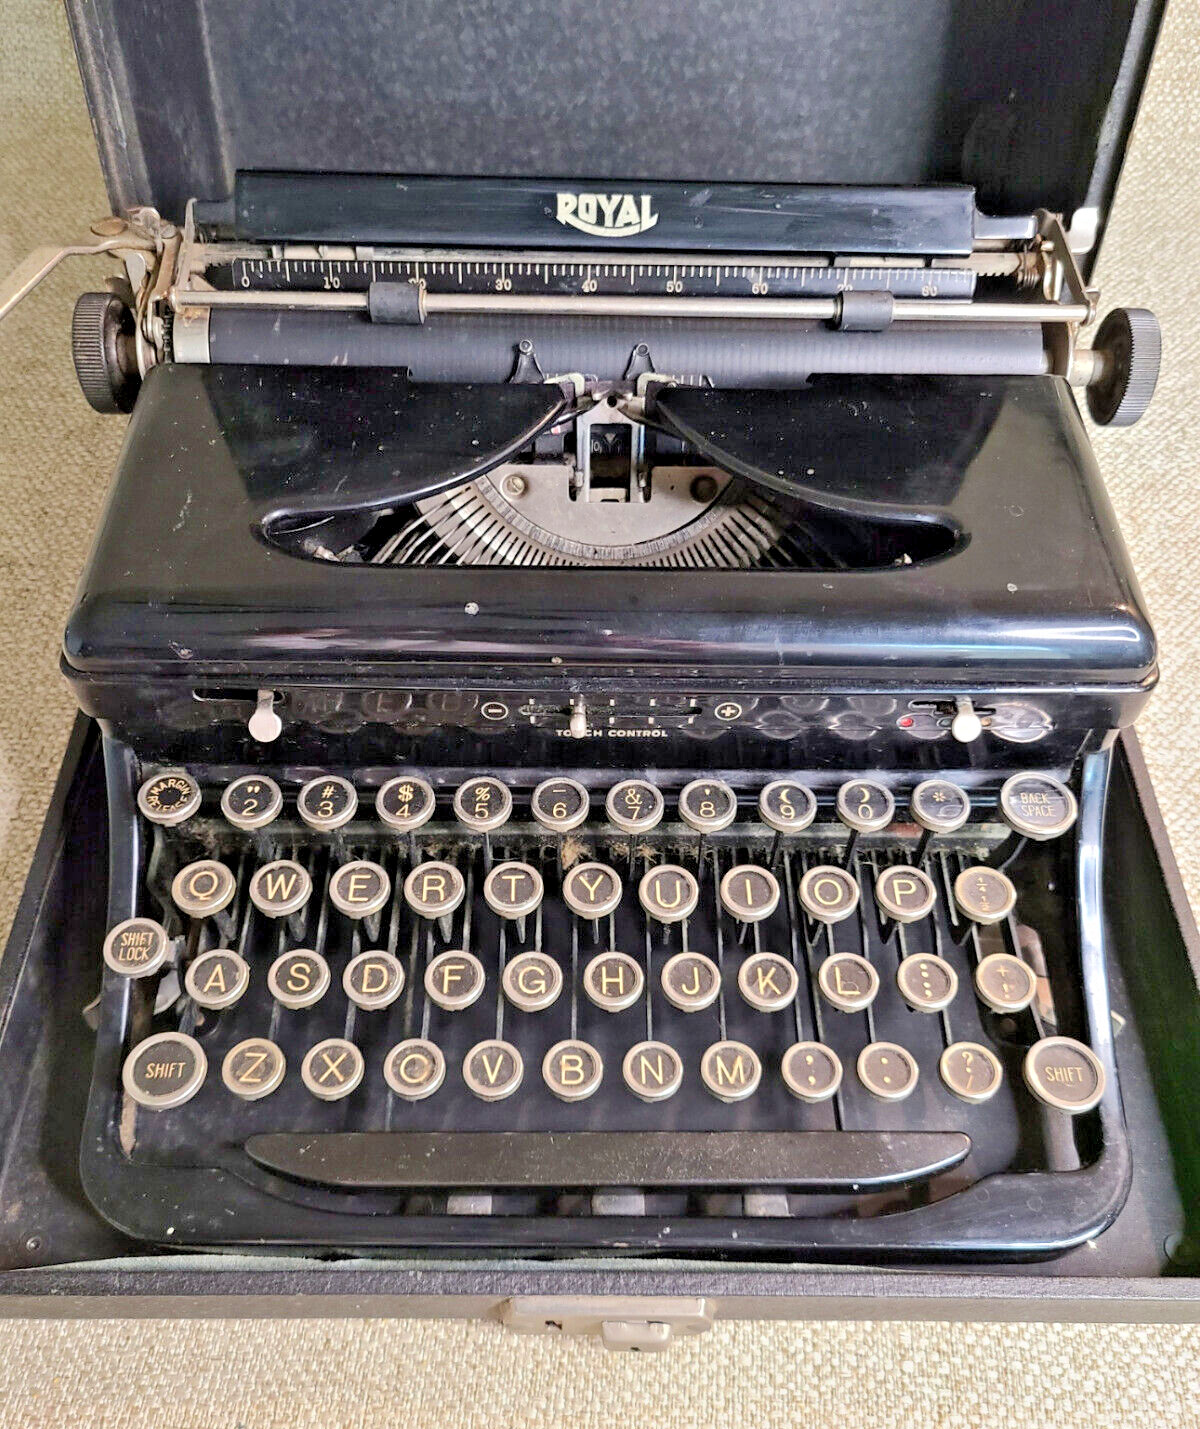 Vintage 1936 Royal Model O Portable Typewriter w/Case #O-575935 Works and Types